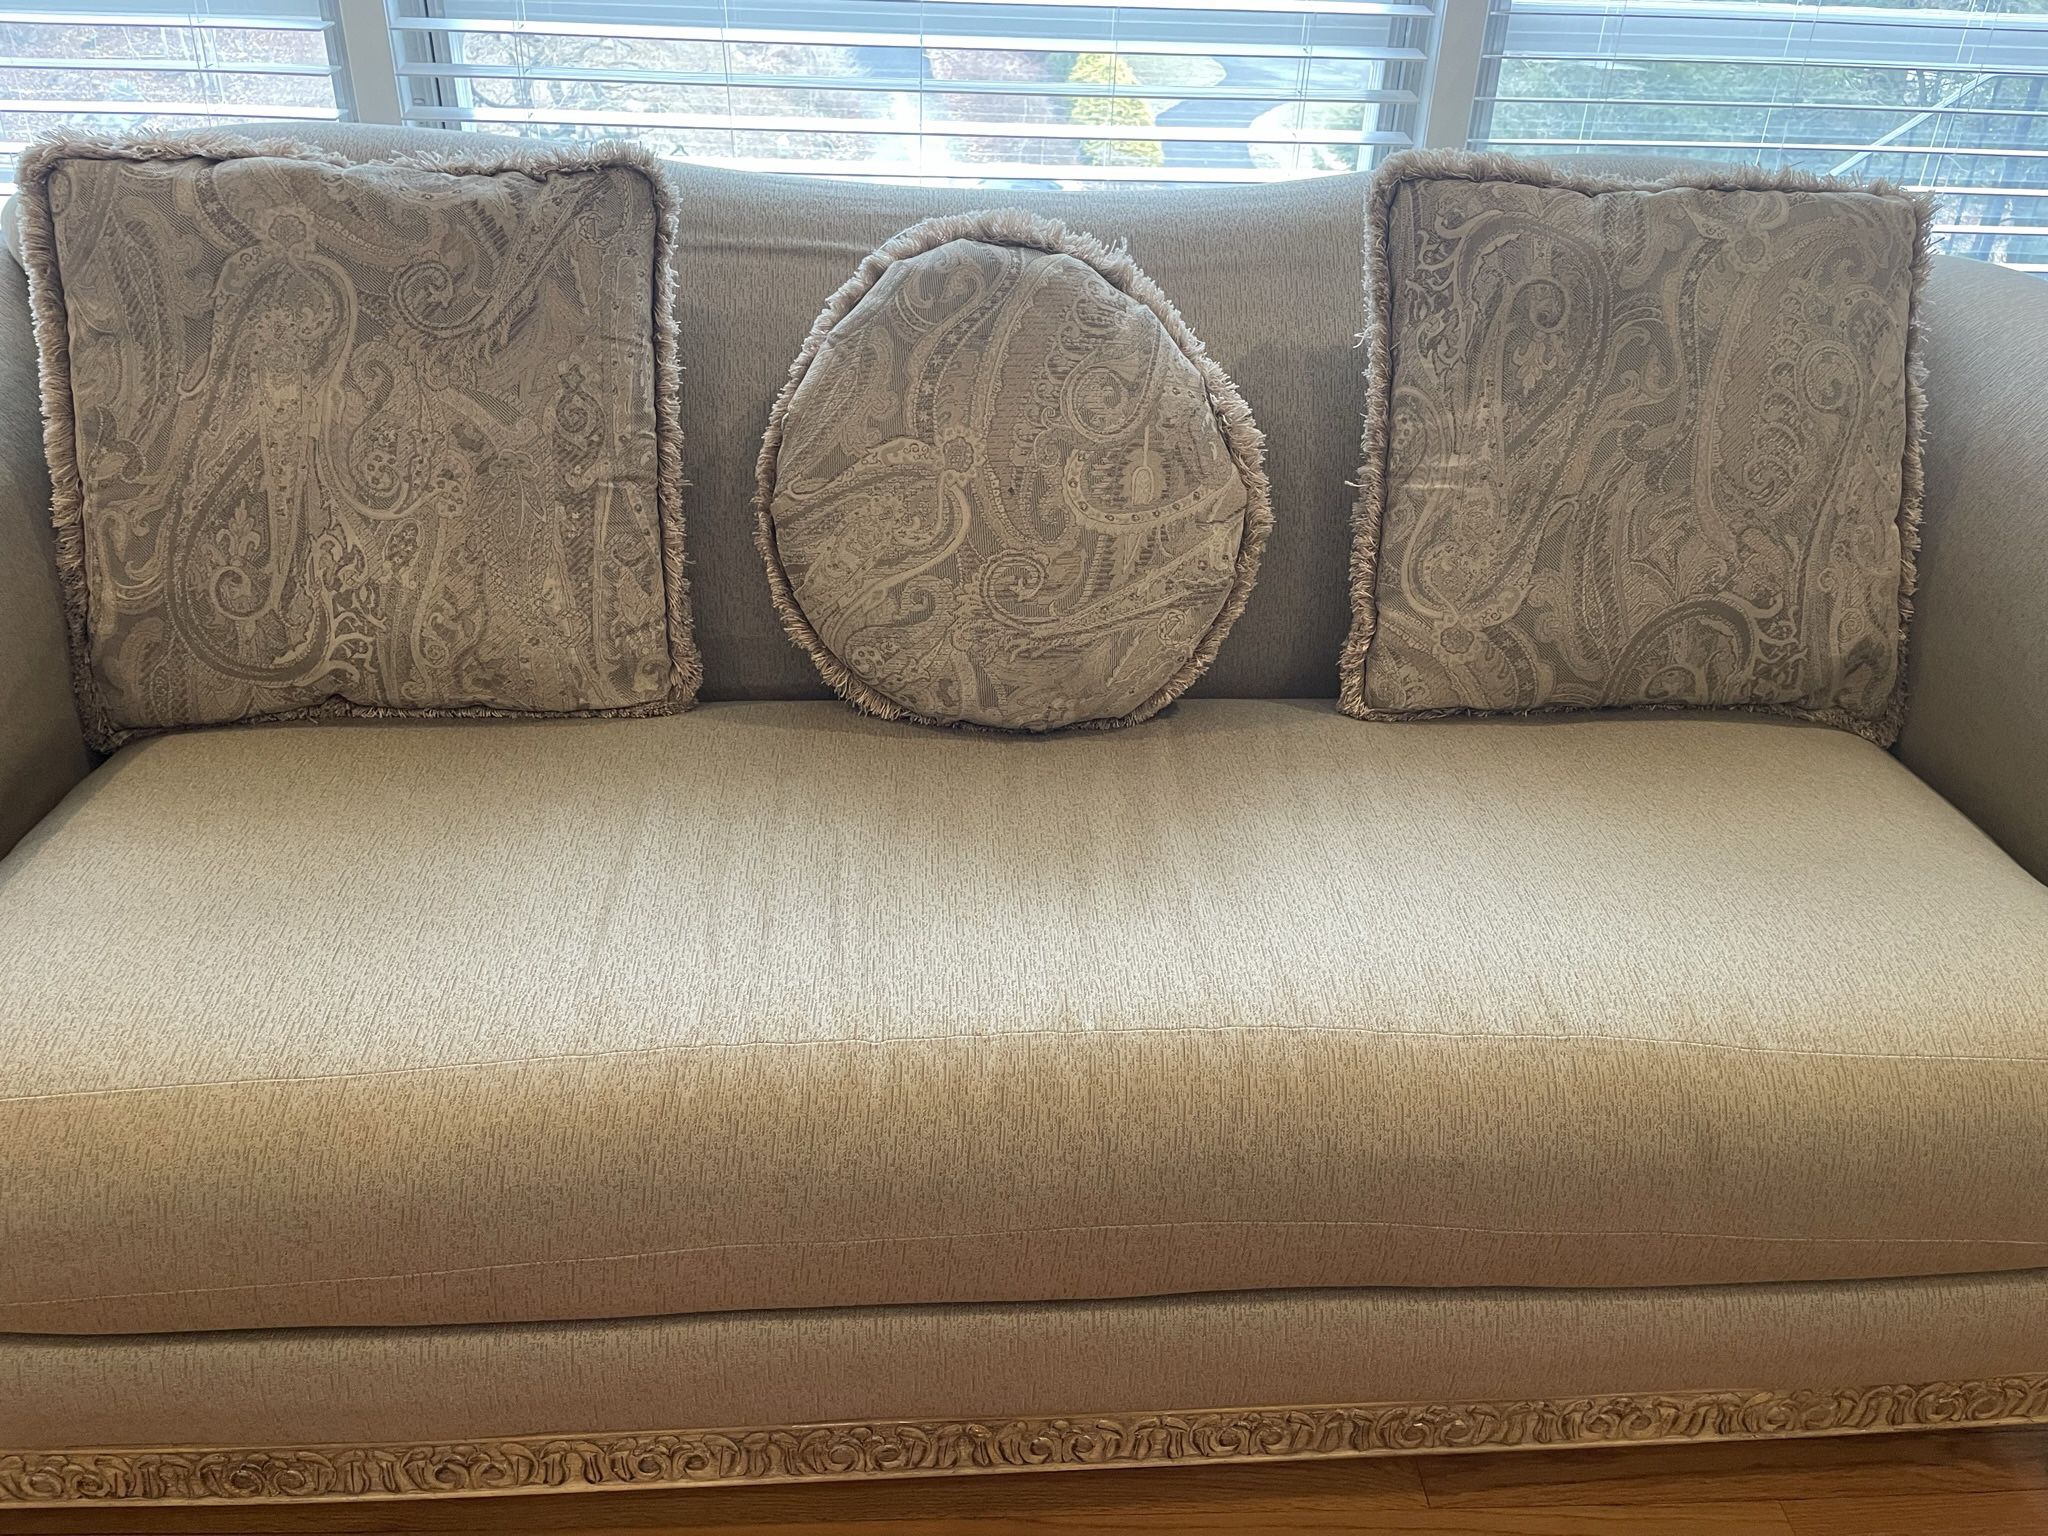 Sofa & Chaise Lounge Set $500